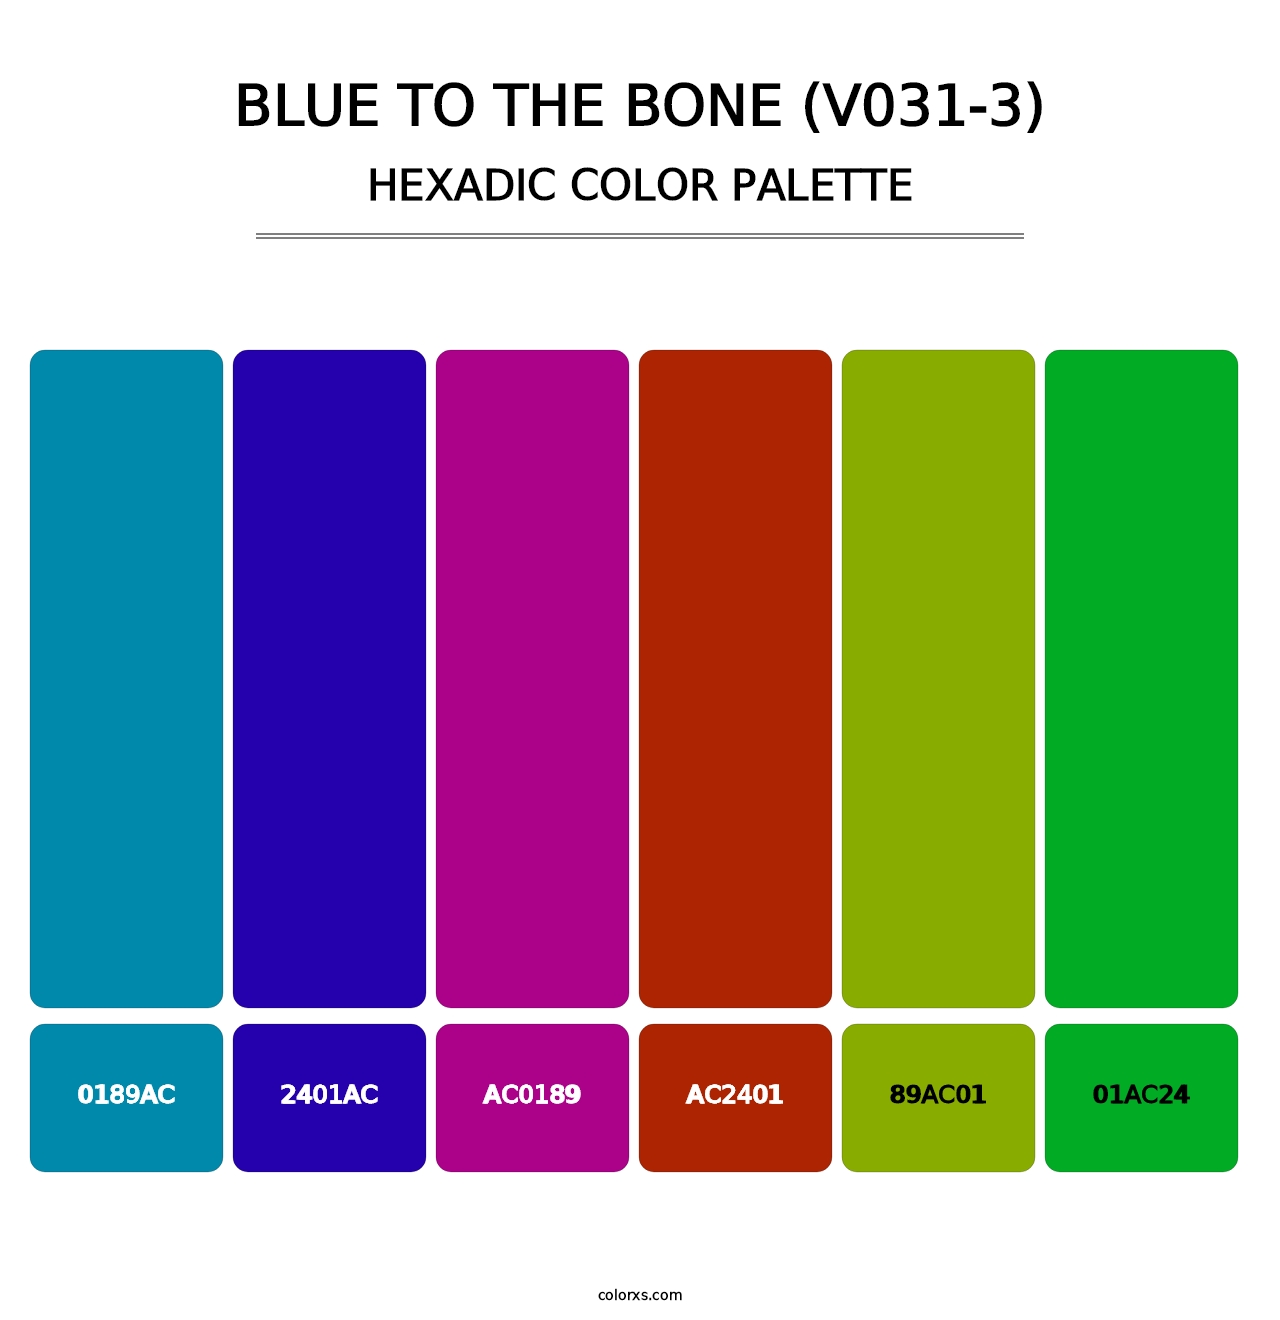 Blue to the Bone (V031-3) - Hexadic Color Palette